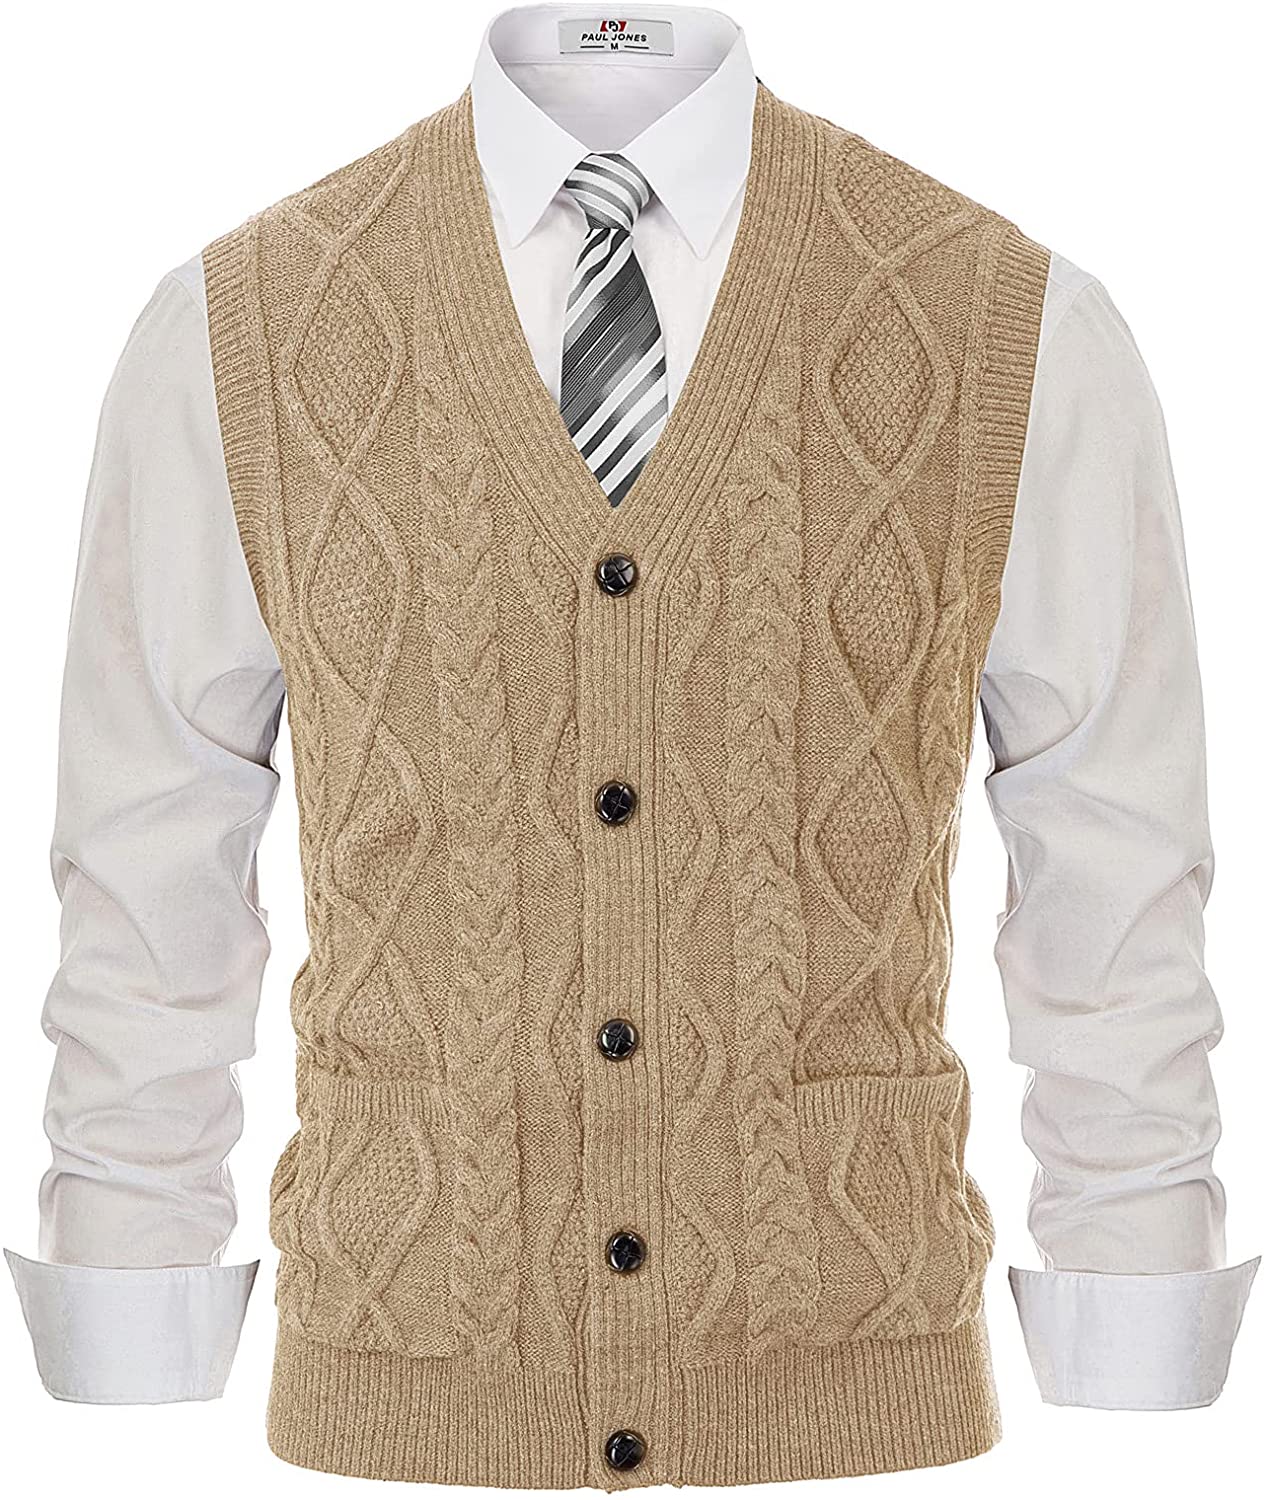 PJ PAUL JONES Mens Cardigan Sweater Vest Cable Knitwear V-Neck Waistcoat 